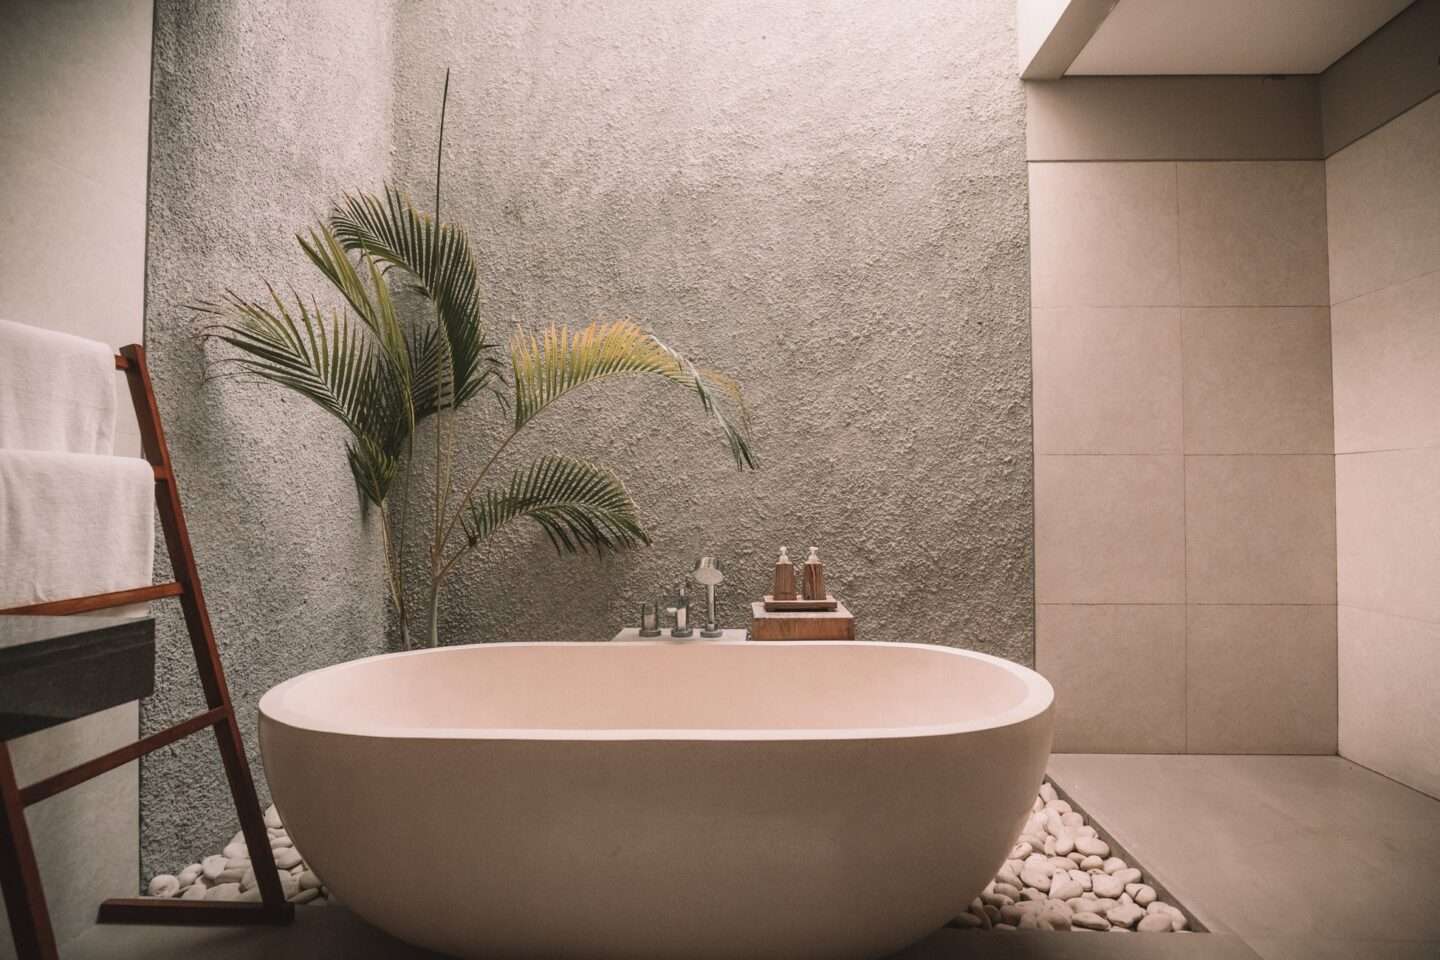 image of a soaking tub